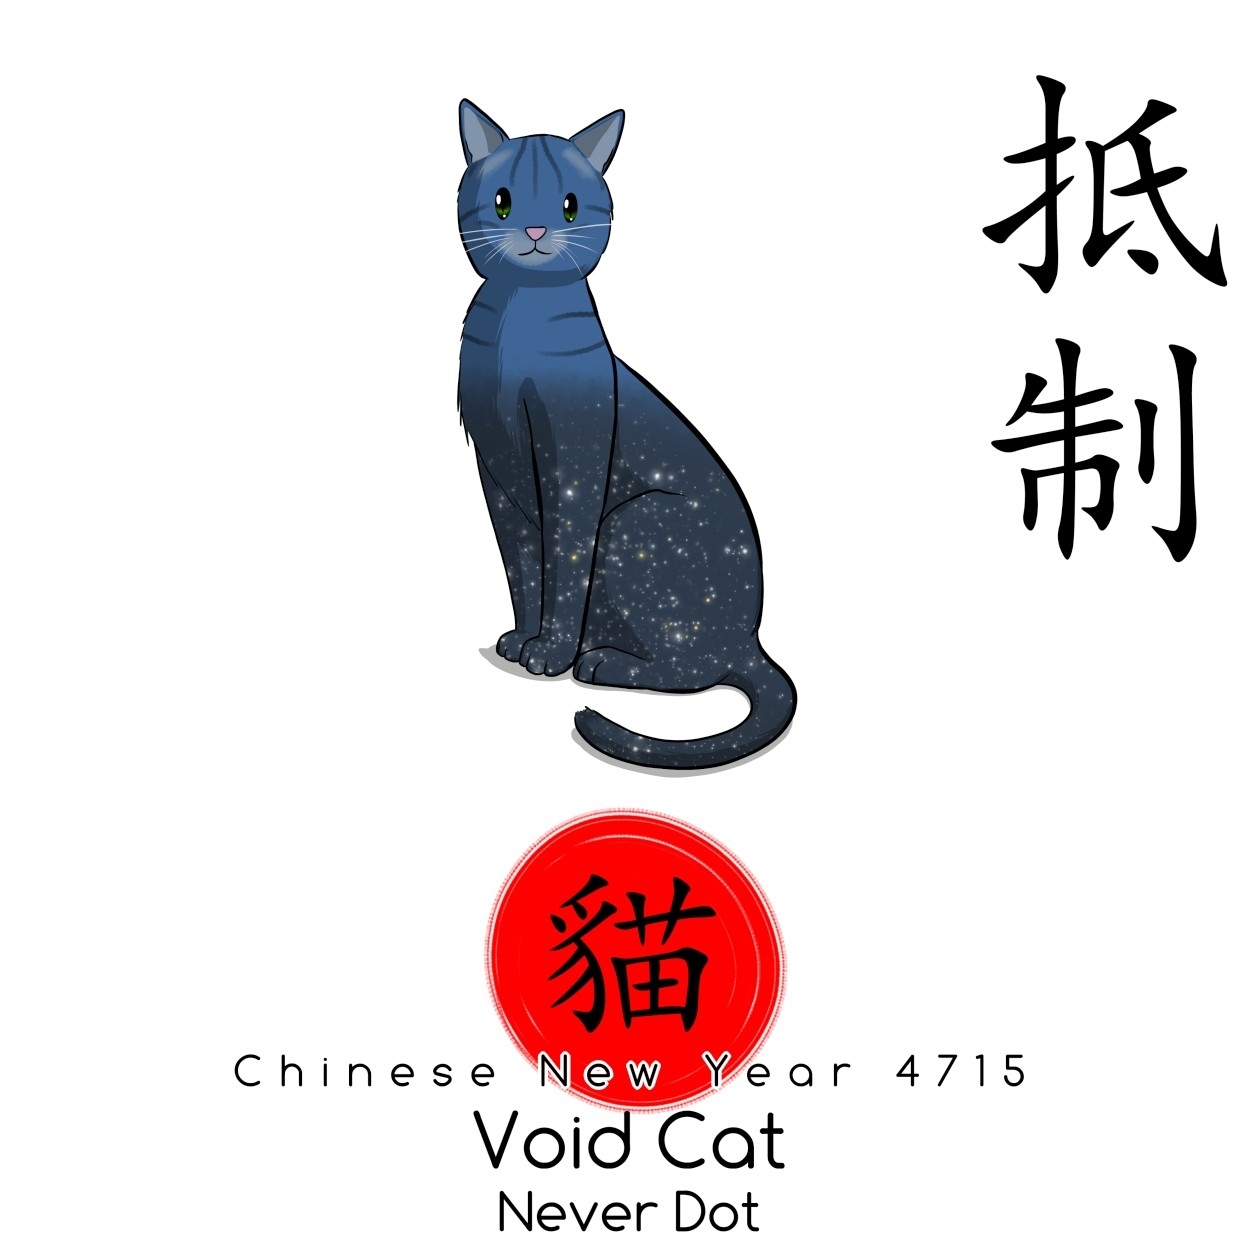 Chinese New Year 4715 • Void Cat